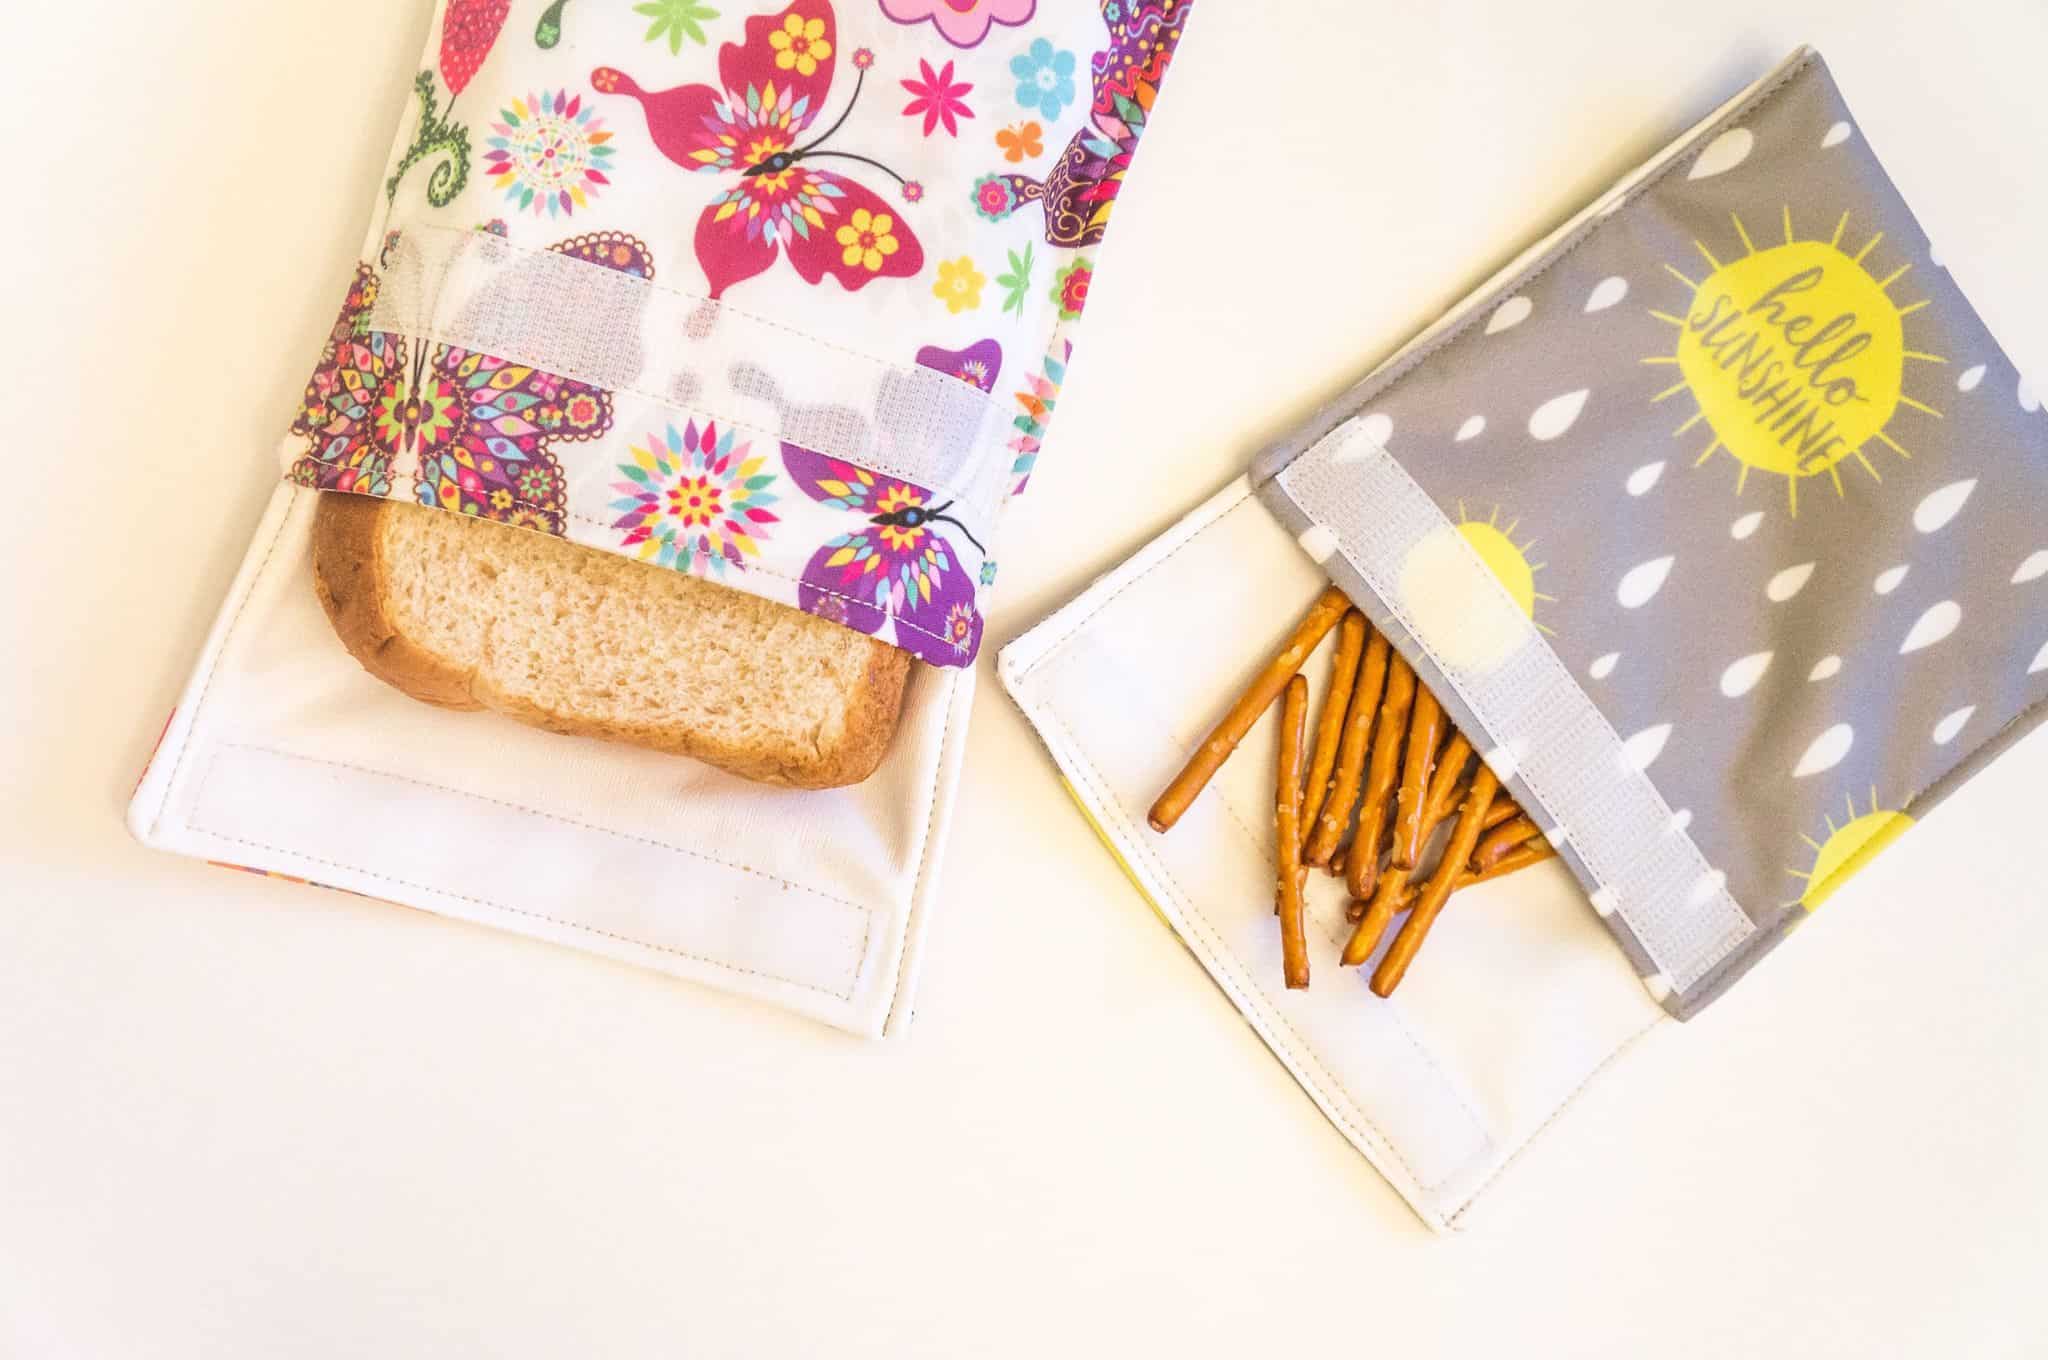 How to Make a Reusable Snack Bag